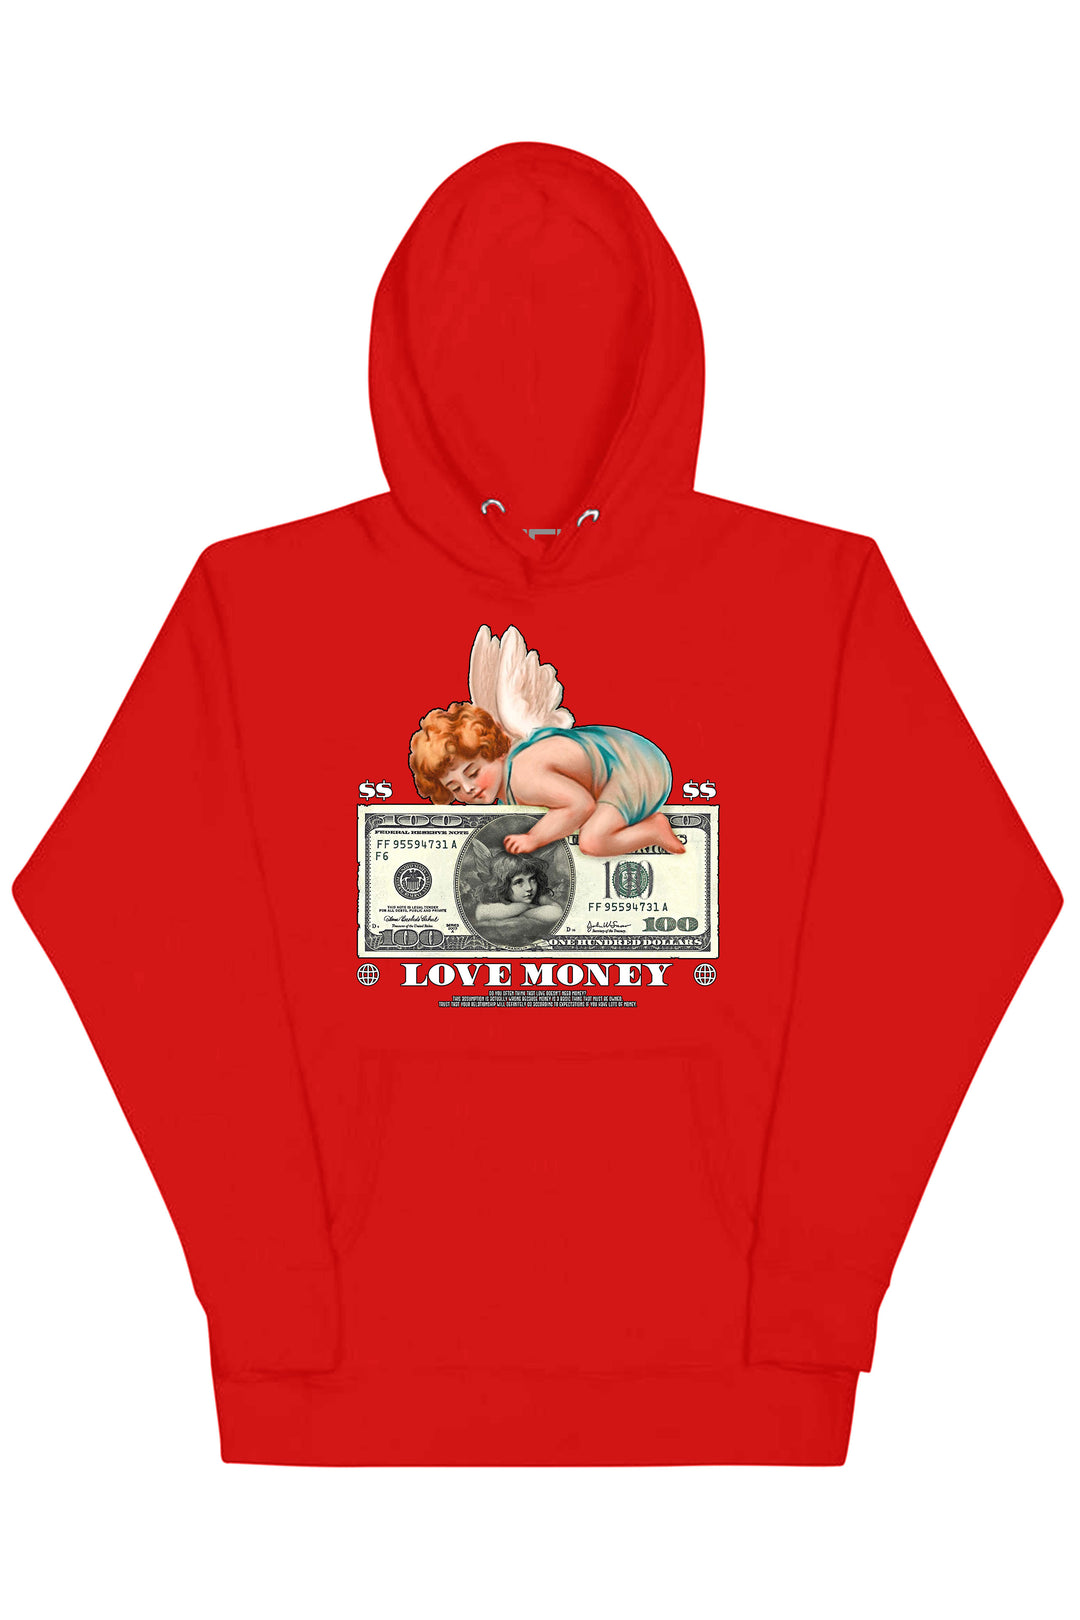 Love Money Hoodie (Multi Color Logo) - Zamage